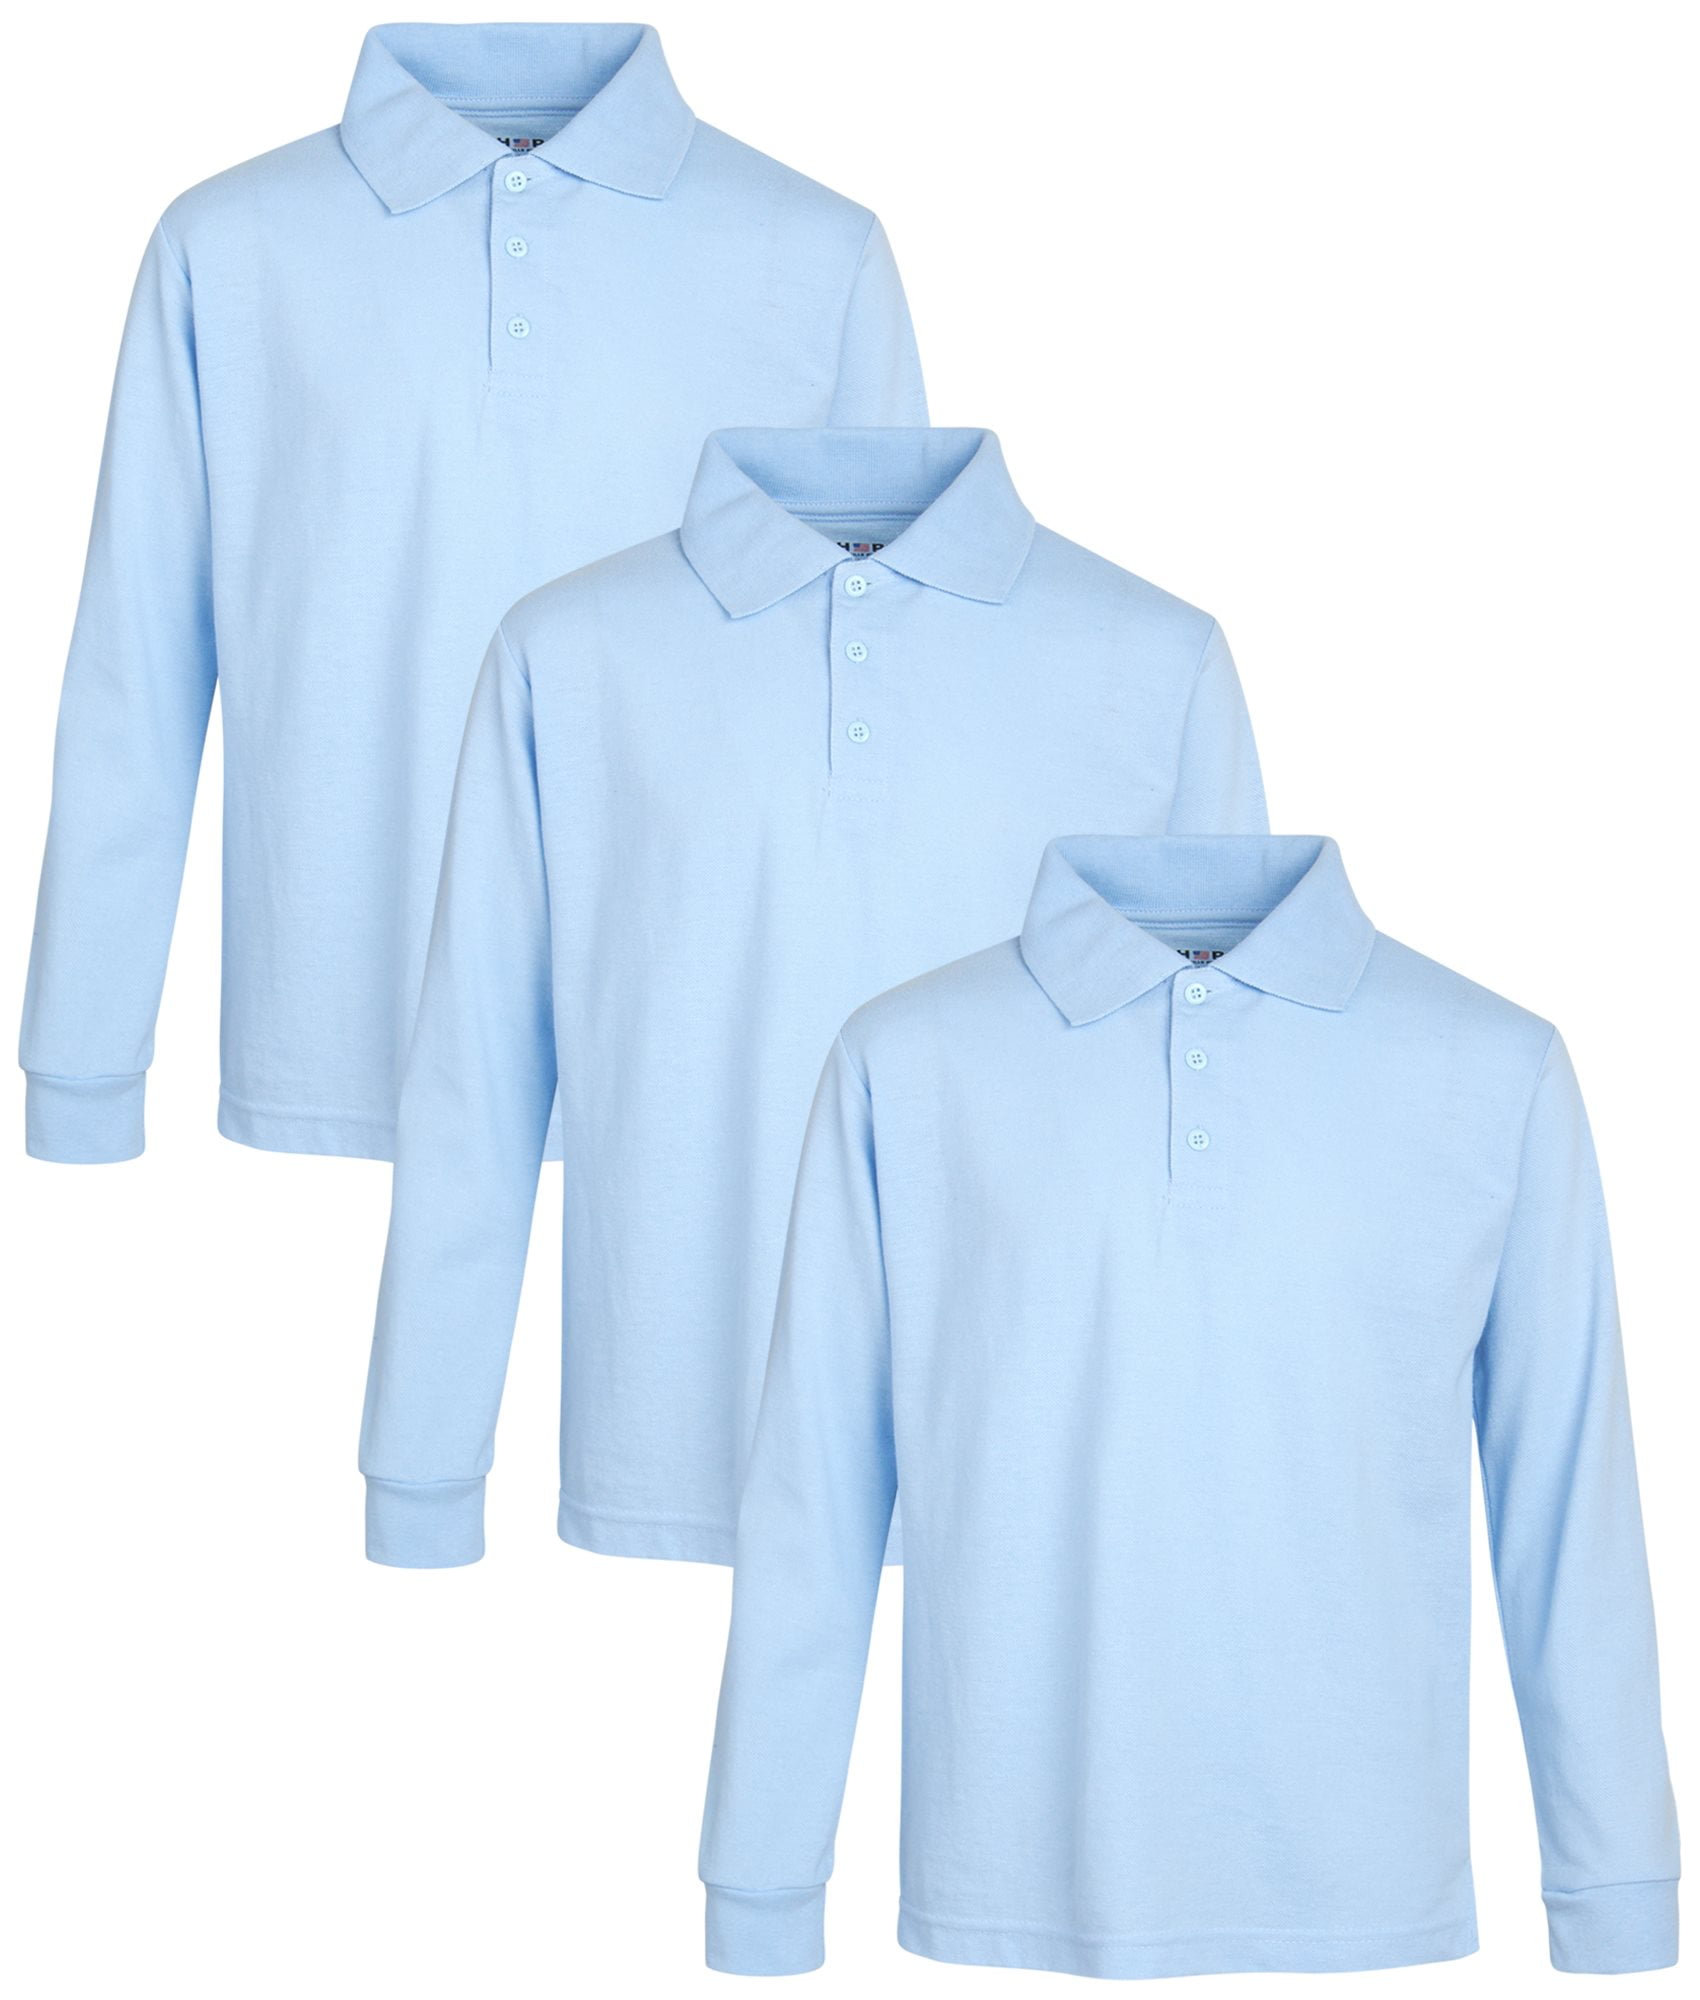 3 Pack Beverly Hills Polo Club Boys Long Sleeve School Uniform Pique Polo Shirts 